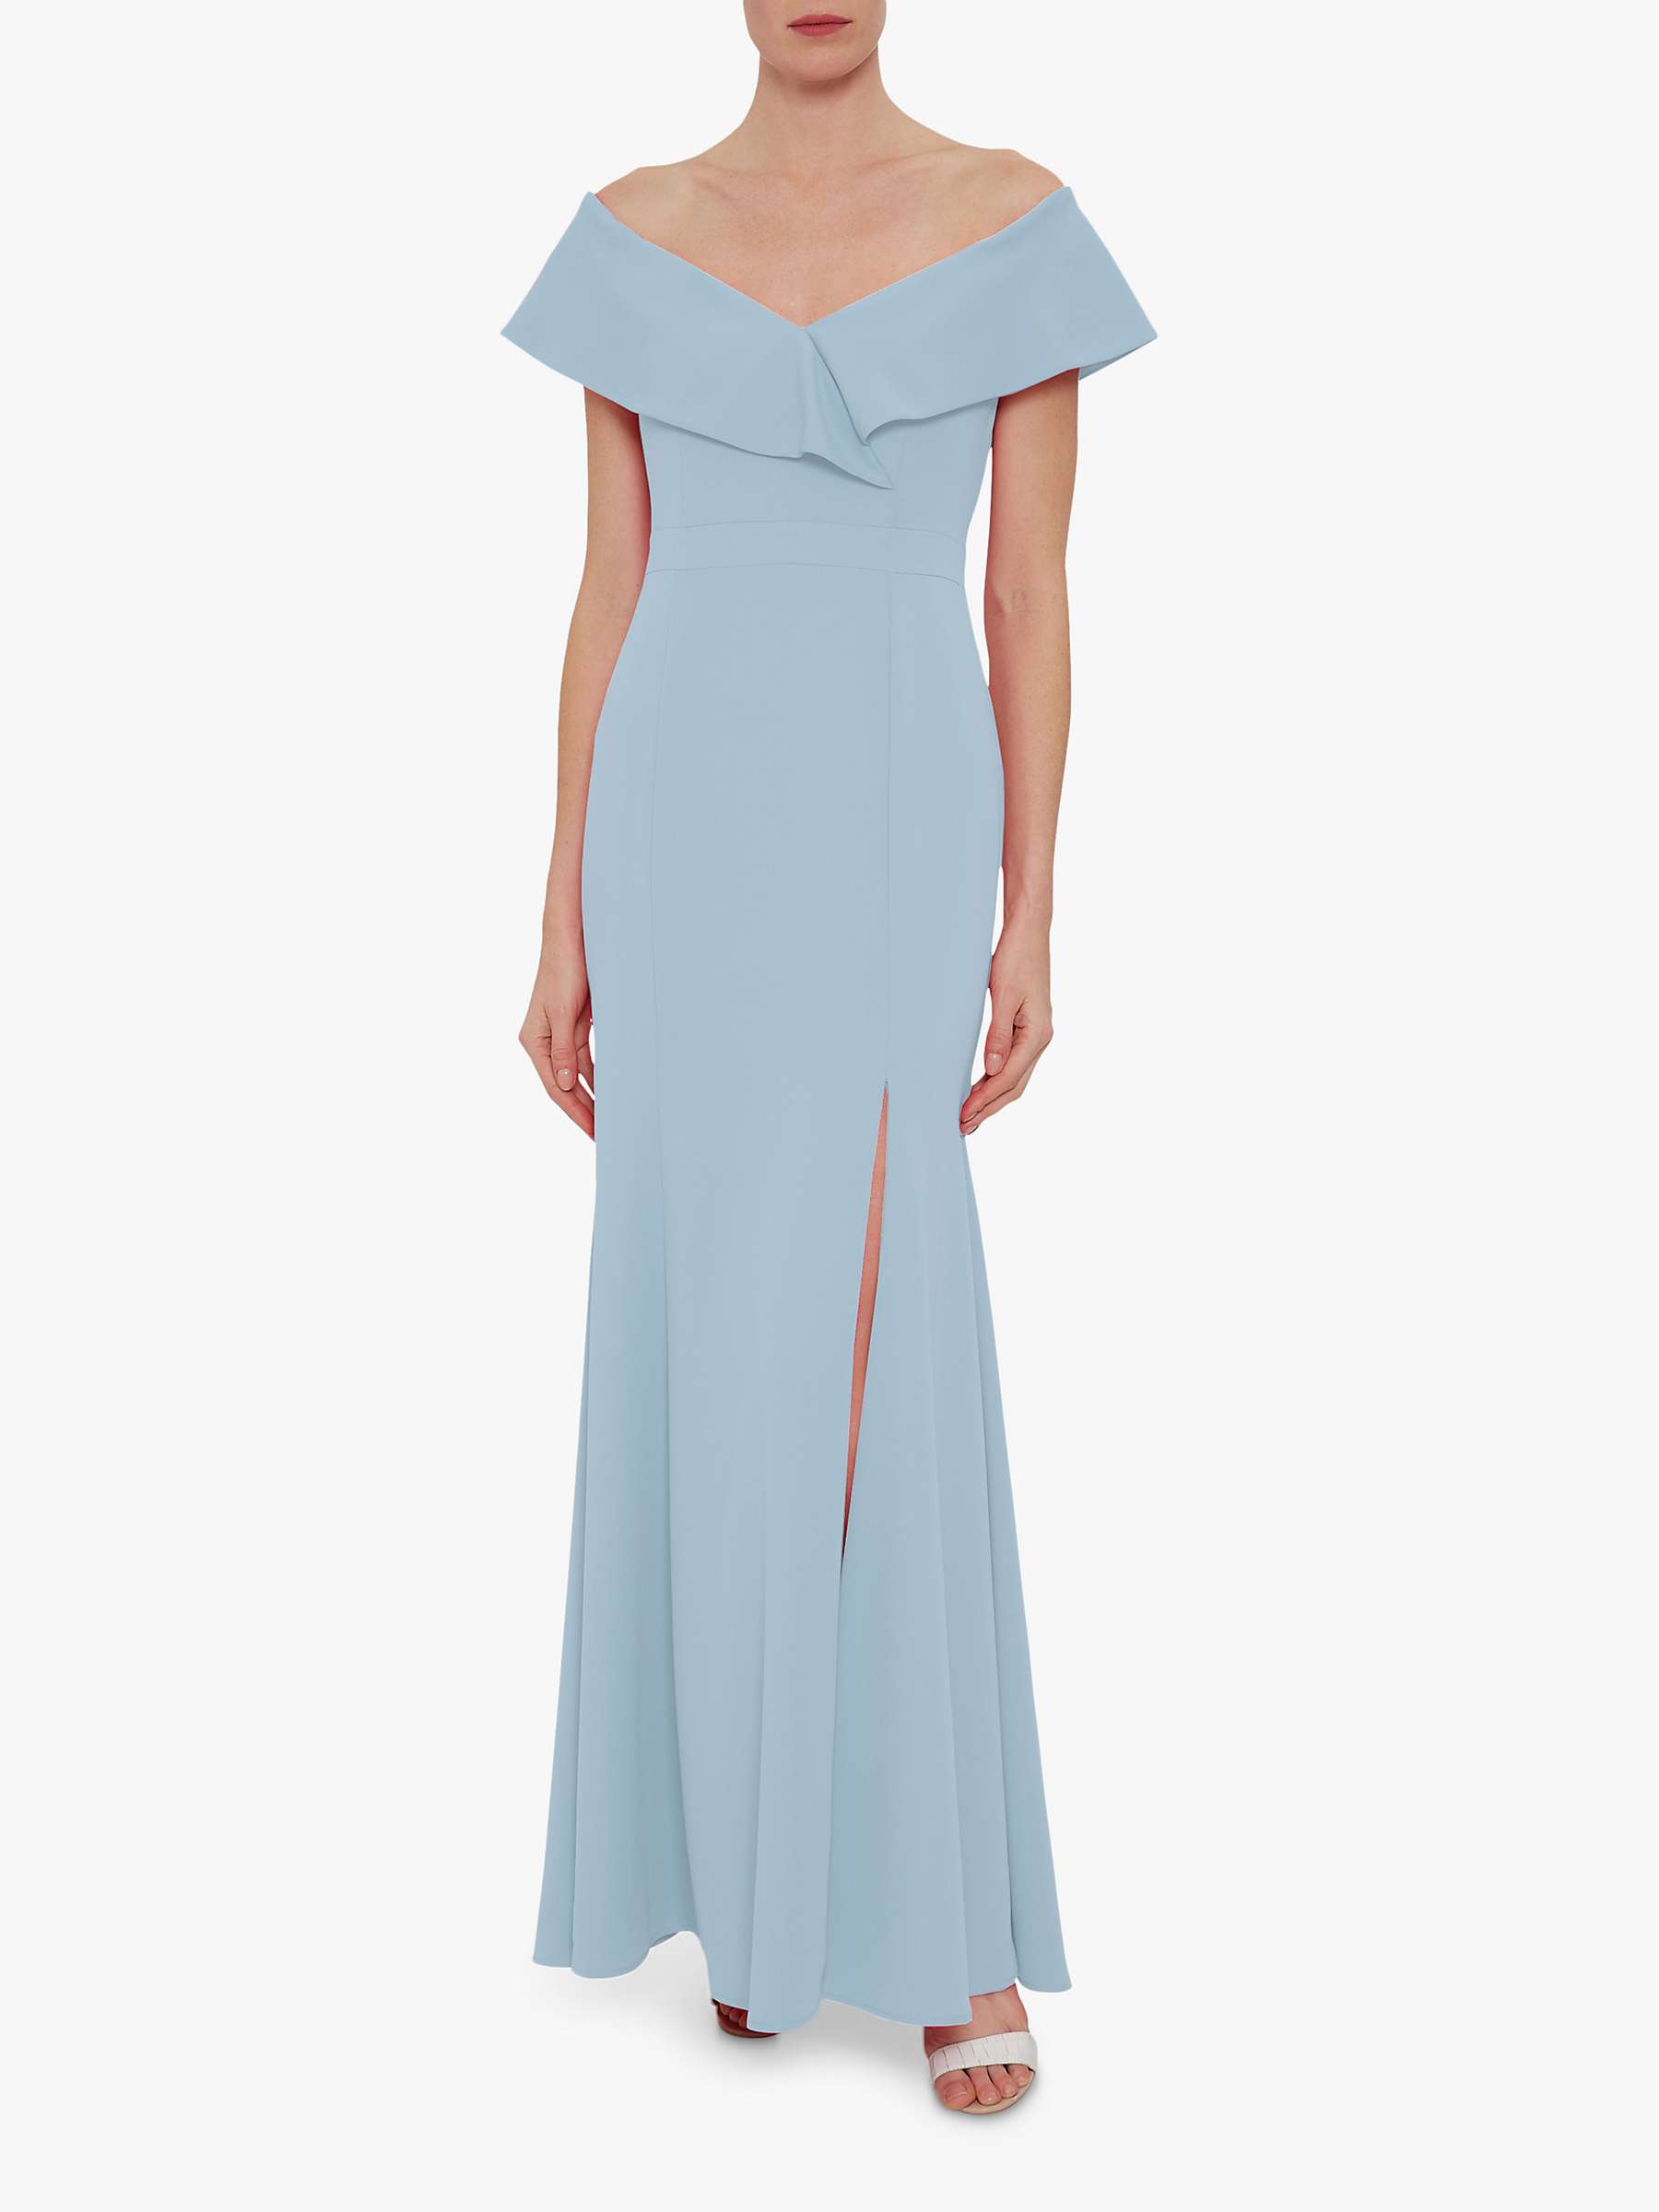 Gina Bacconi Maira Crepe Maxi Dress, Nordic Blue at John Lewis & Partners